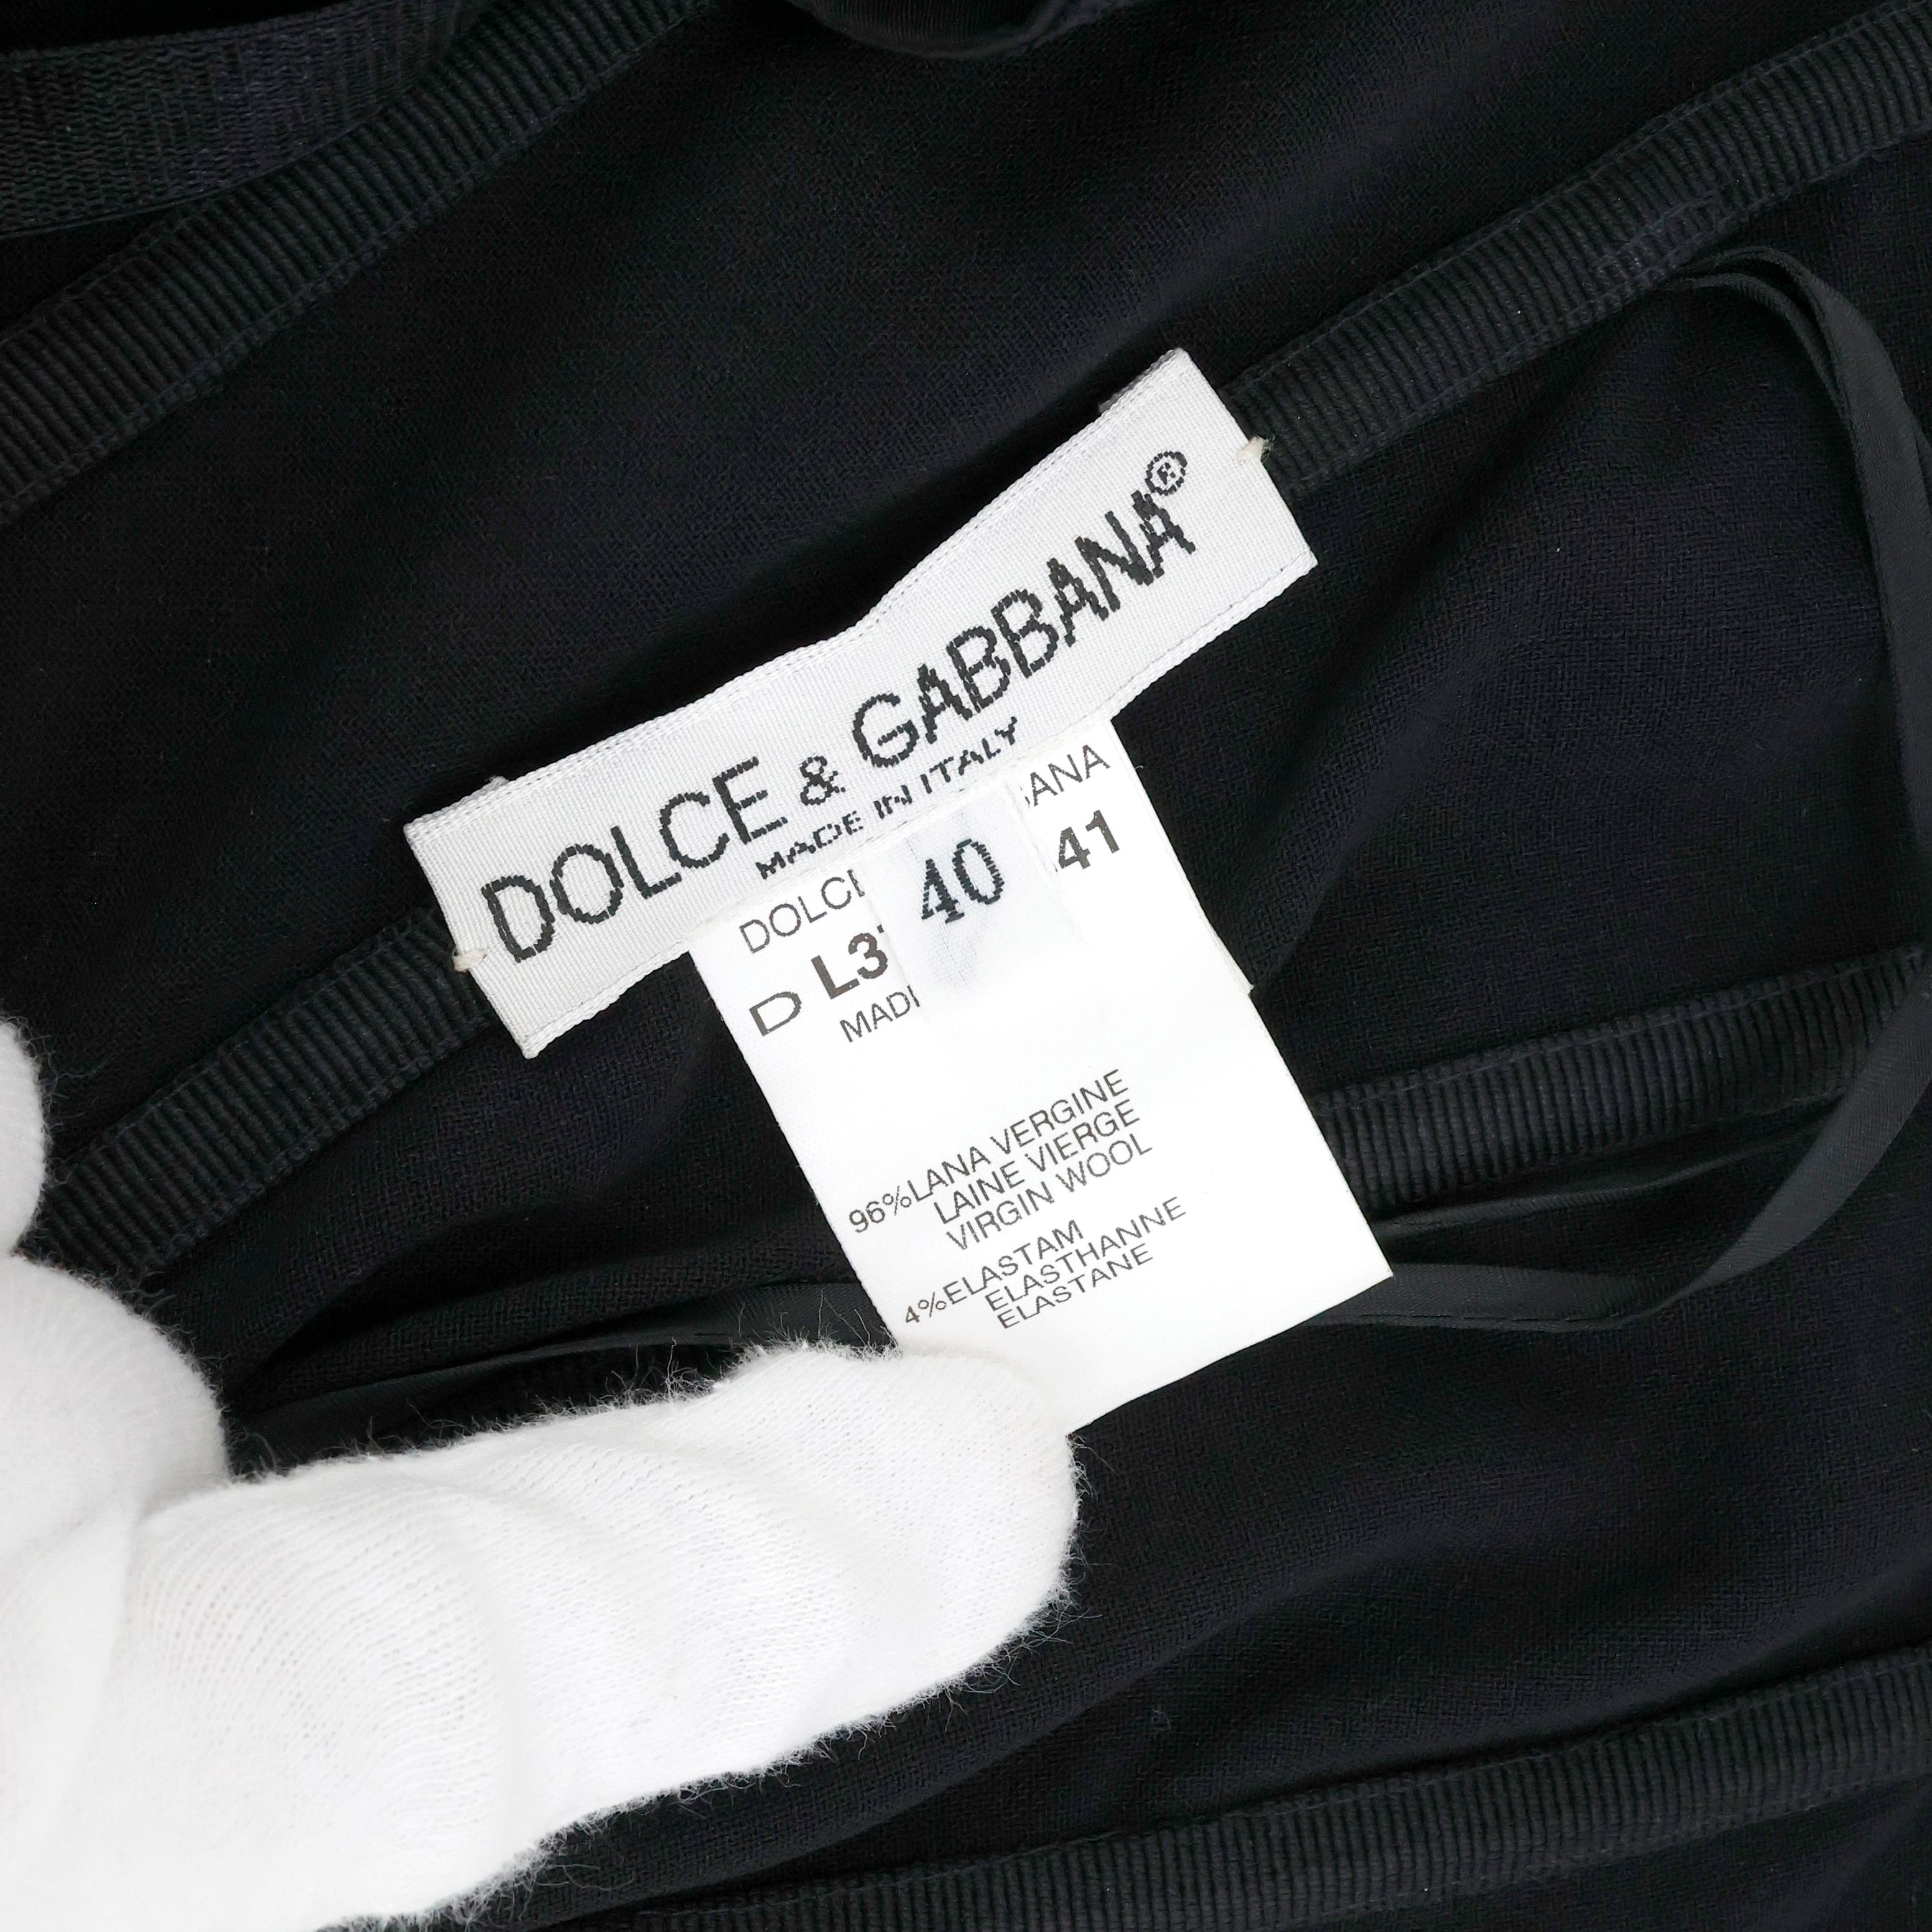 Women's Dolce e Gabbana Black Corset Dress For Sale